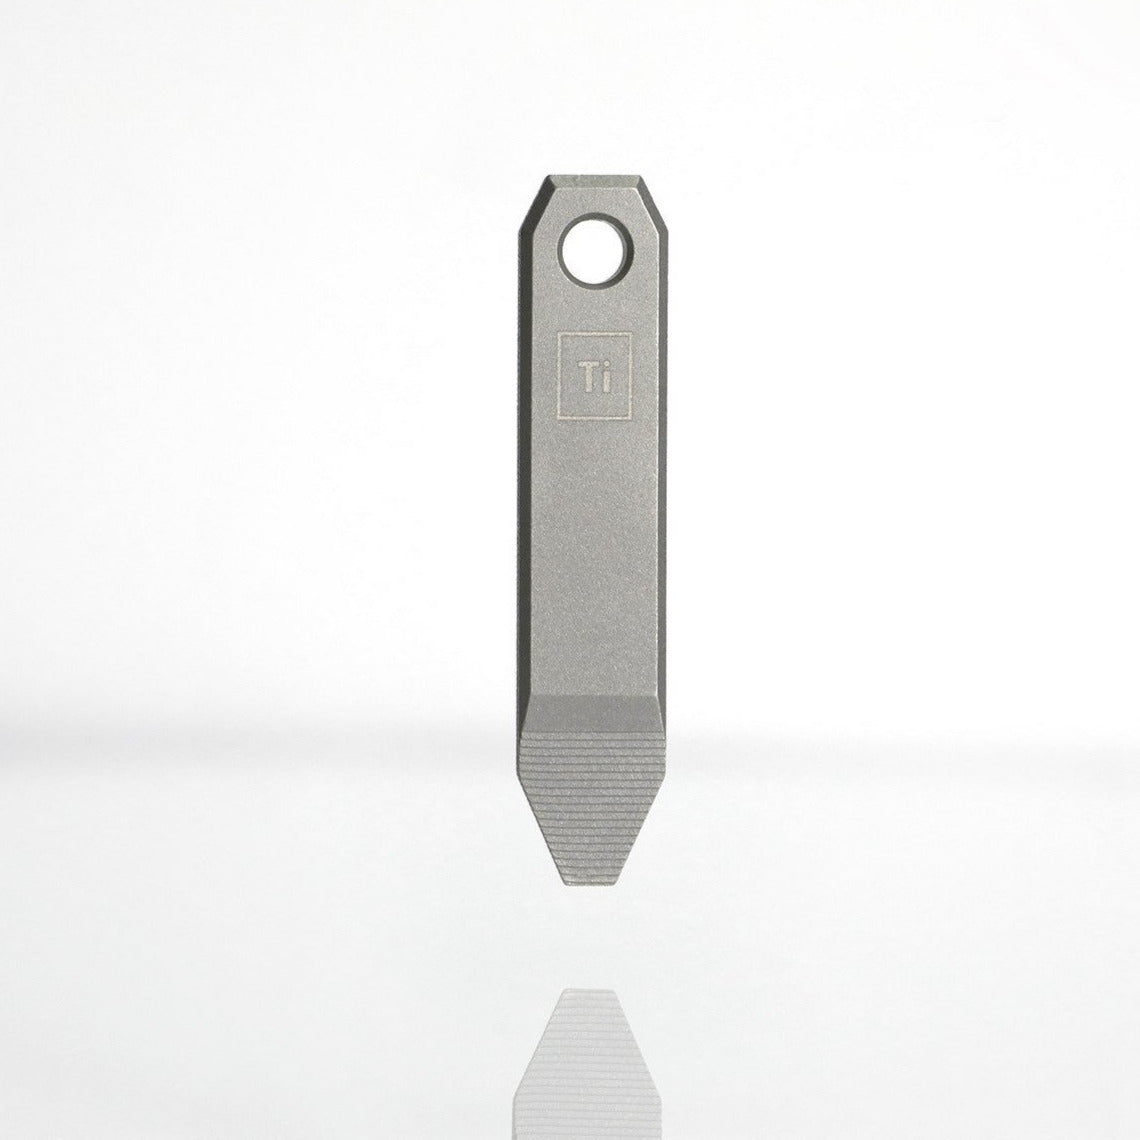 Mini Titanium Pry Bar - Big Idea Design LLC - INTL